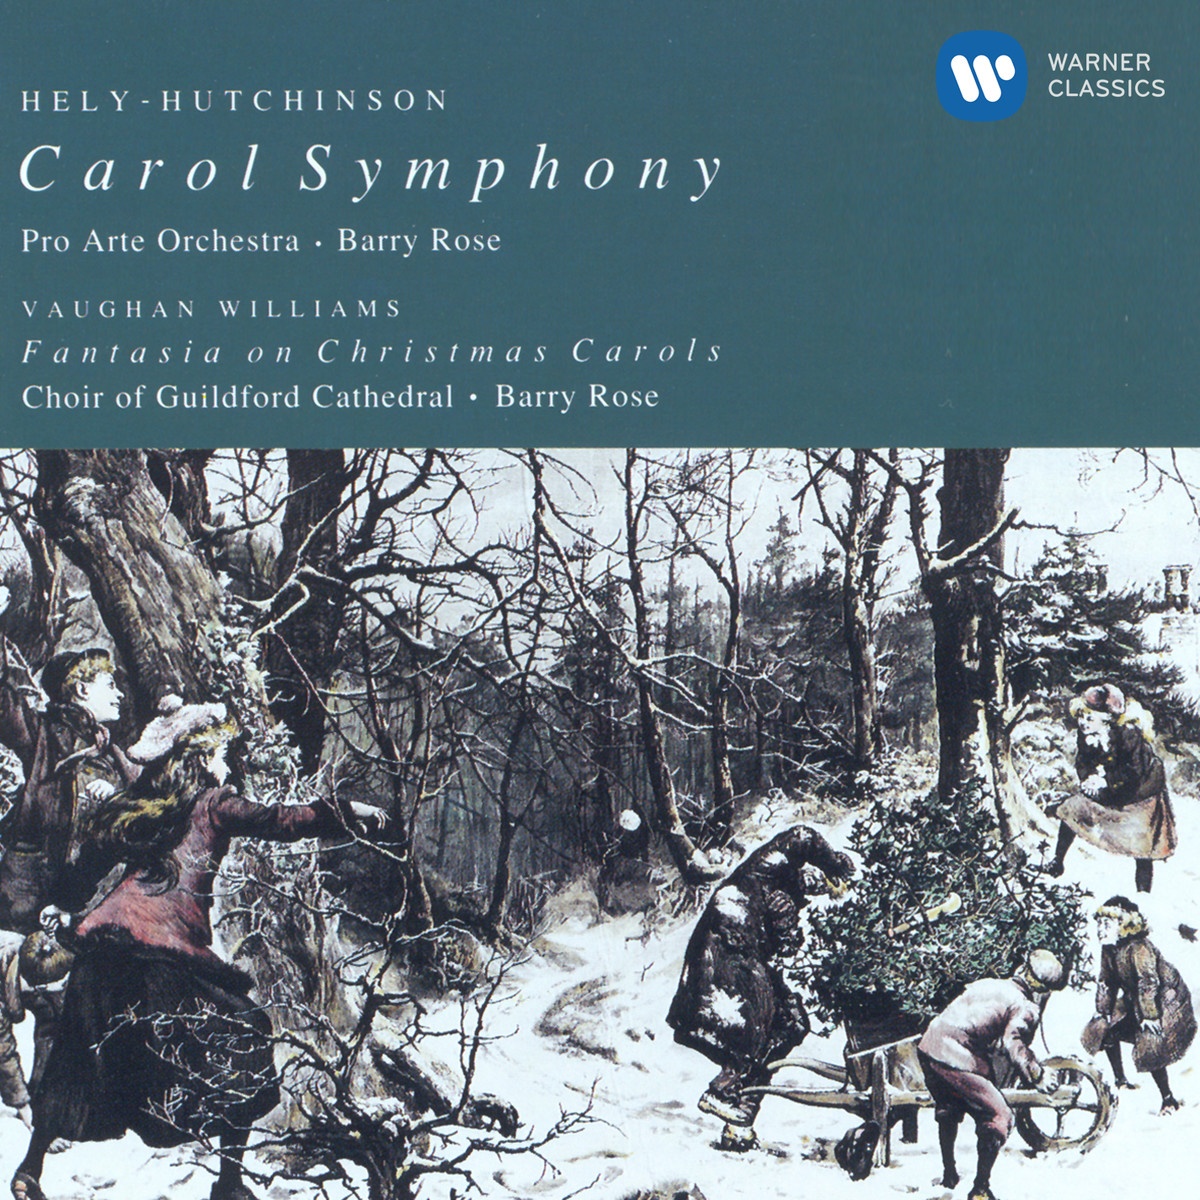 Carol Symphony (1991 Digital Remaster): Allegro energico